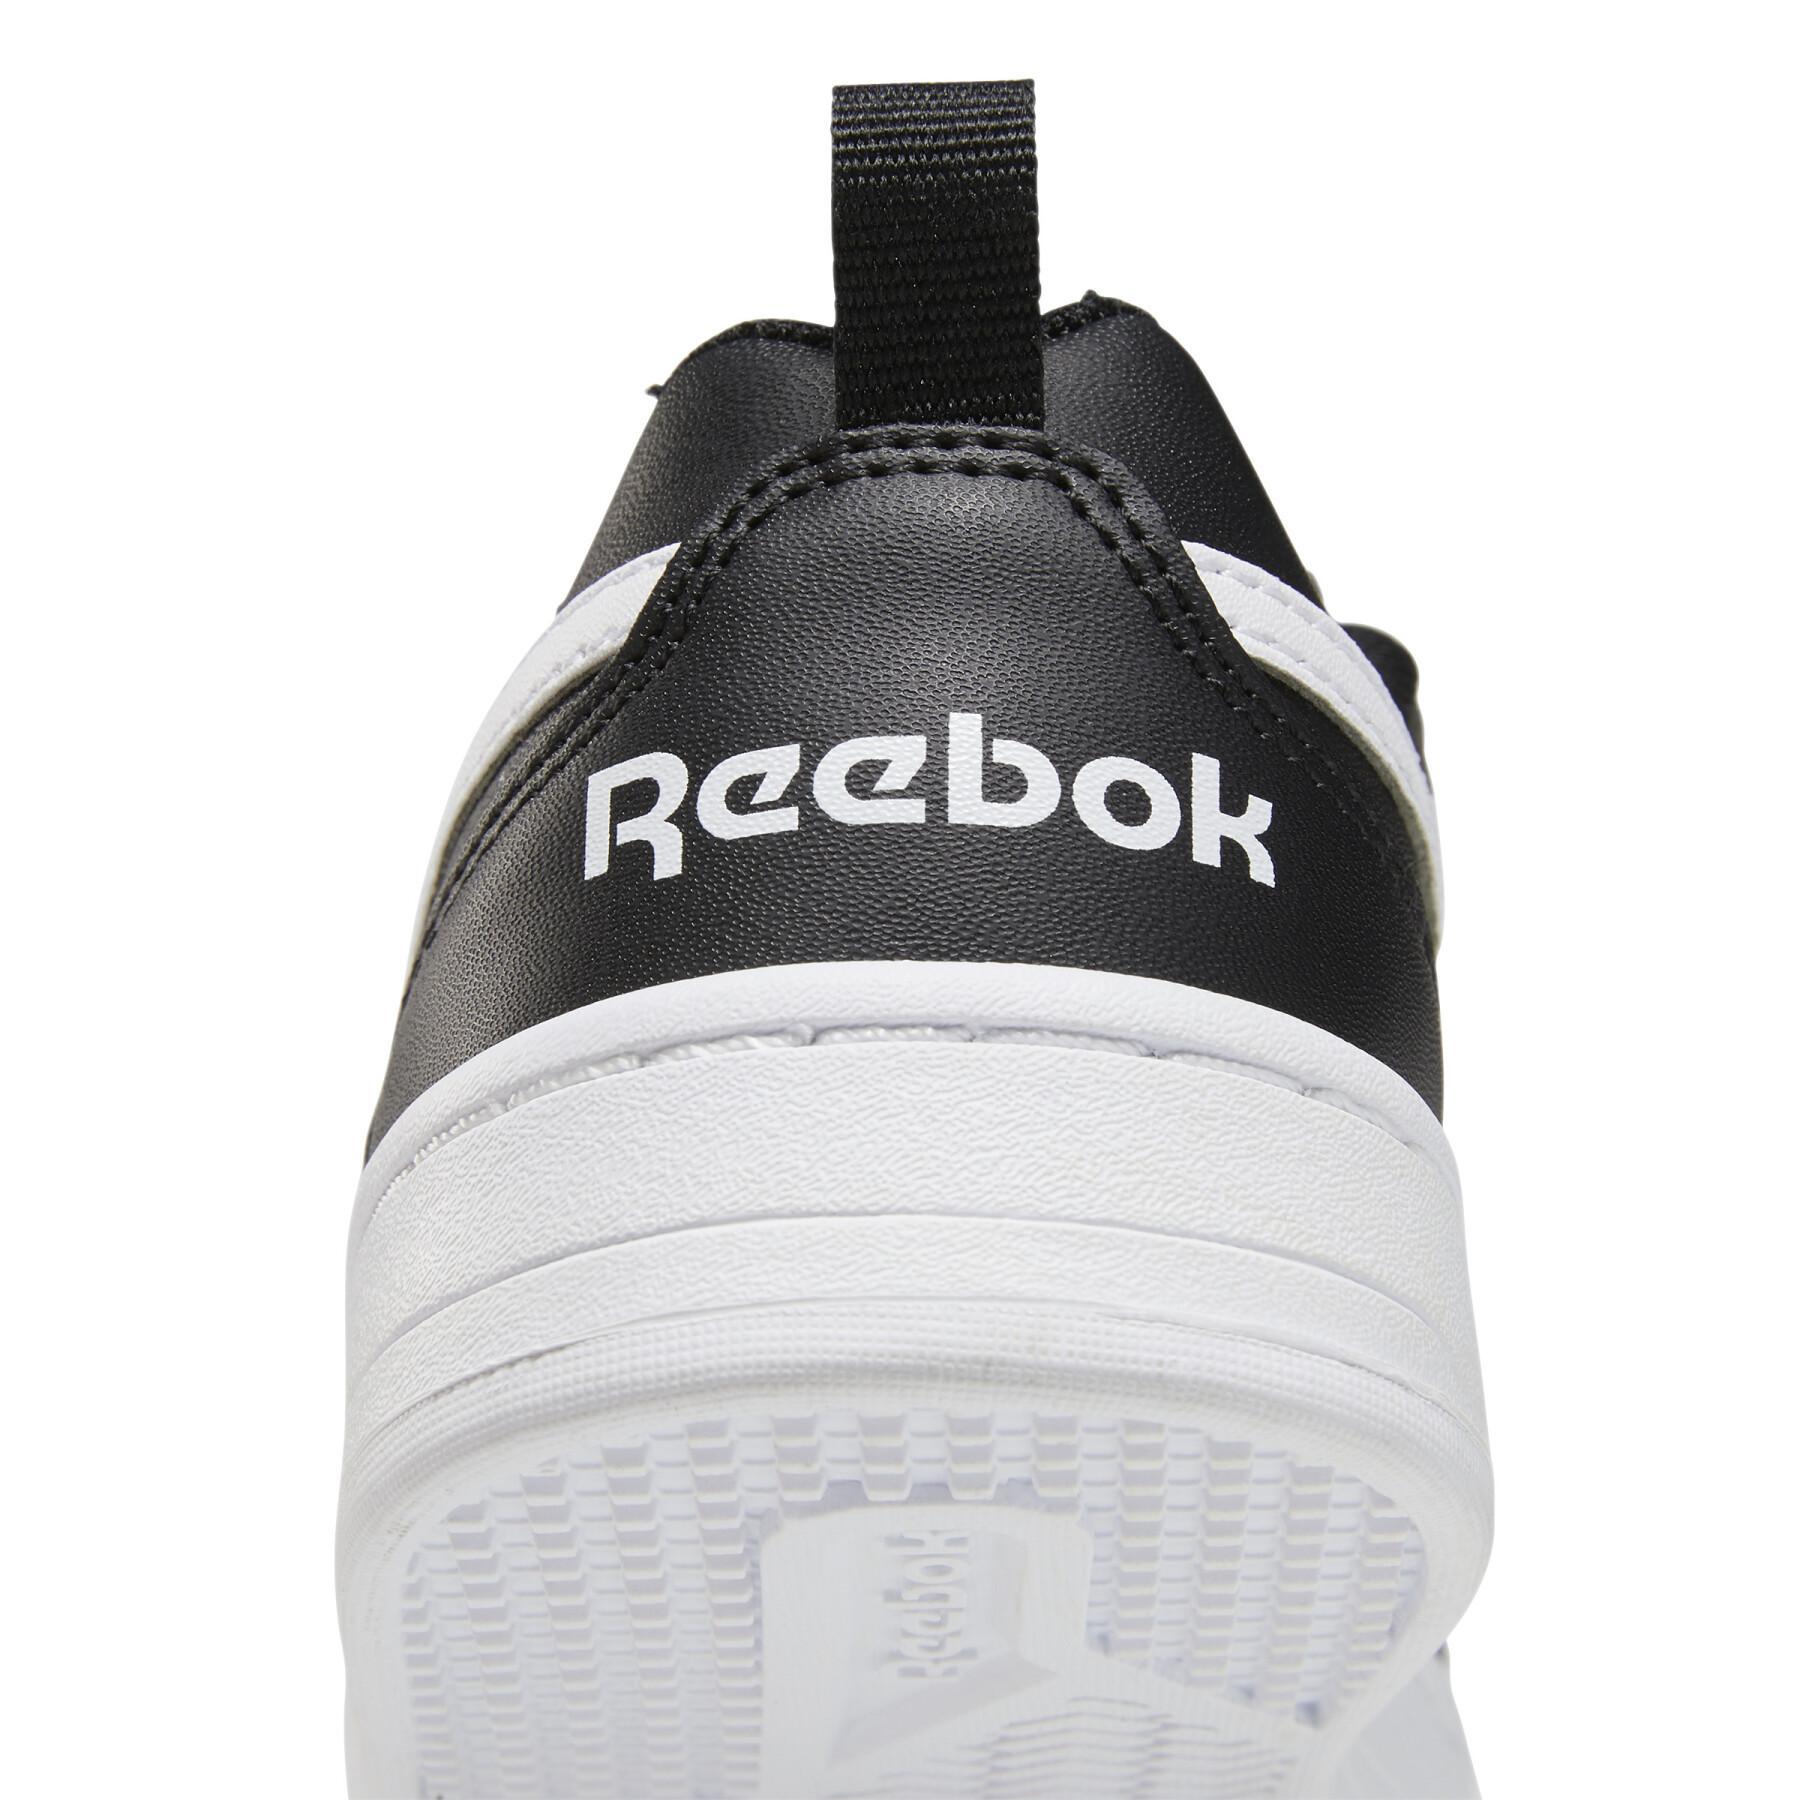 Children's sneakers Reebok Royal Prime 2